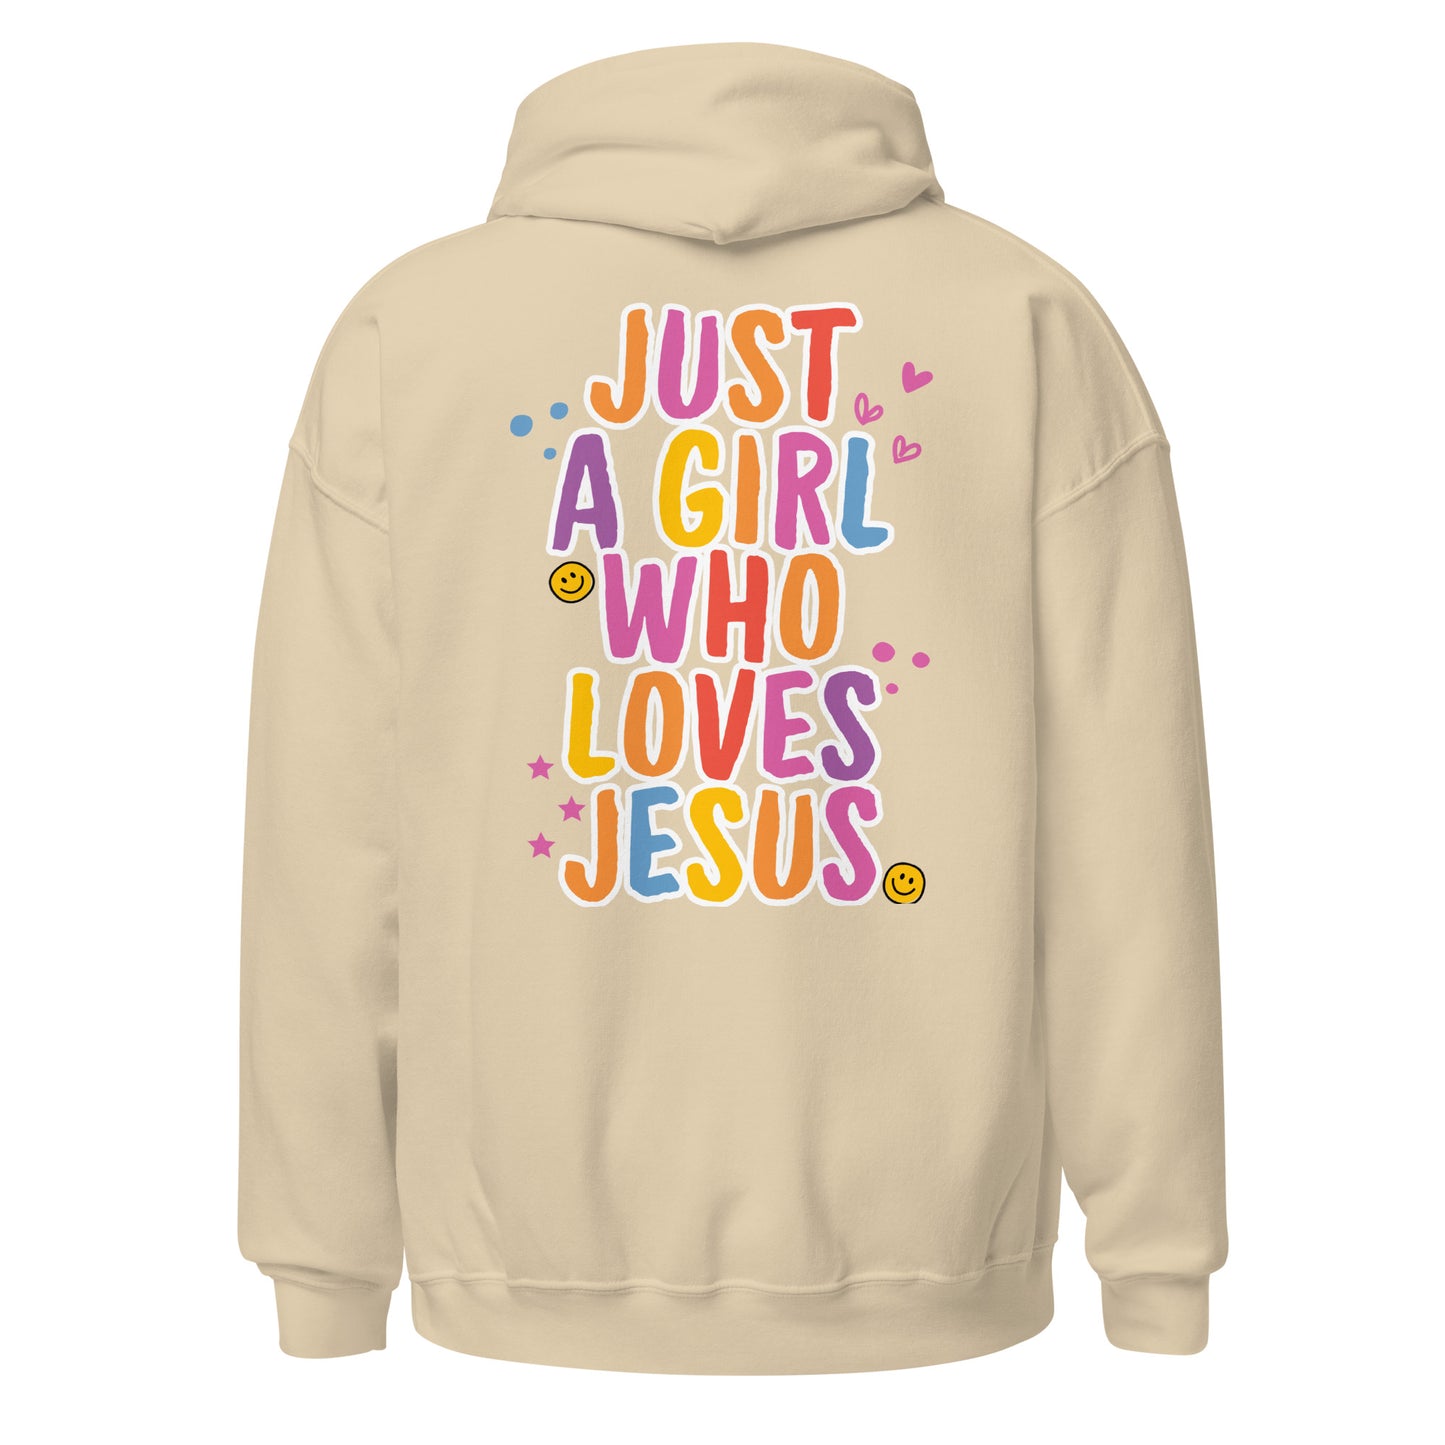 Just a GIRL who loves JESUS - Unisex Hoodie